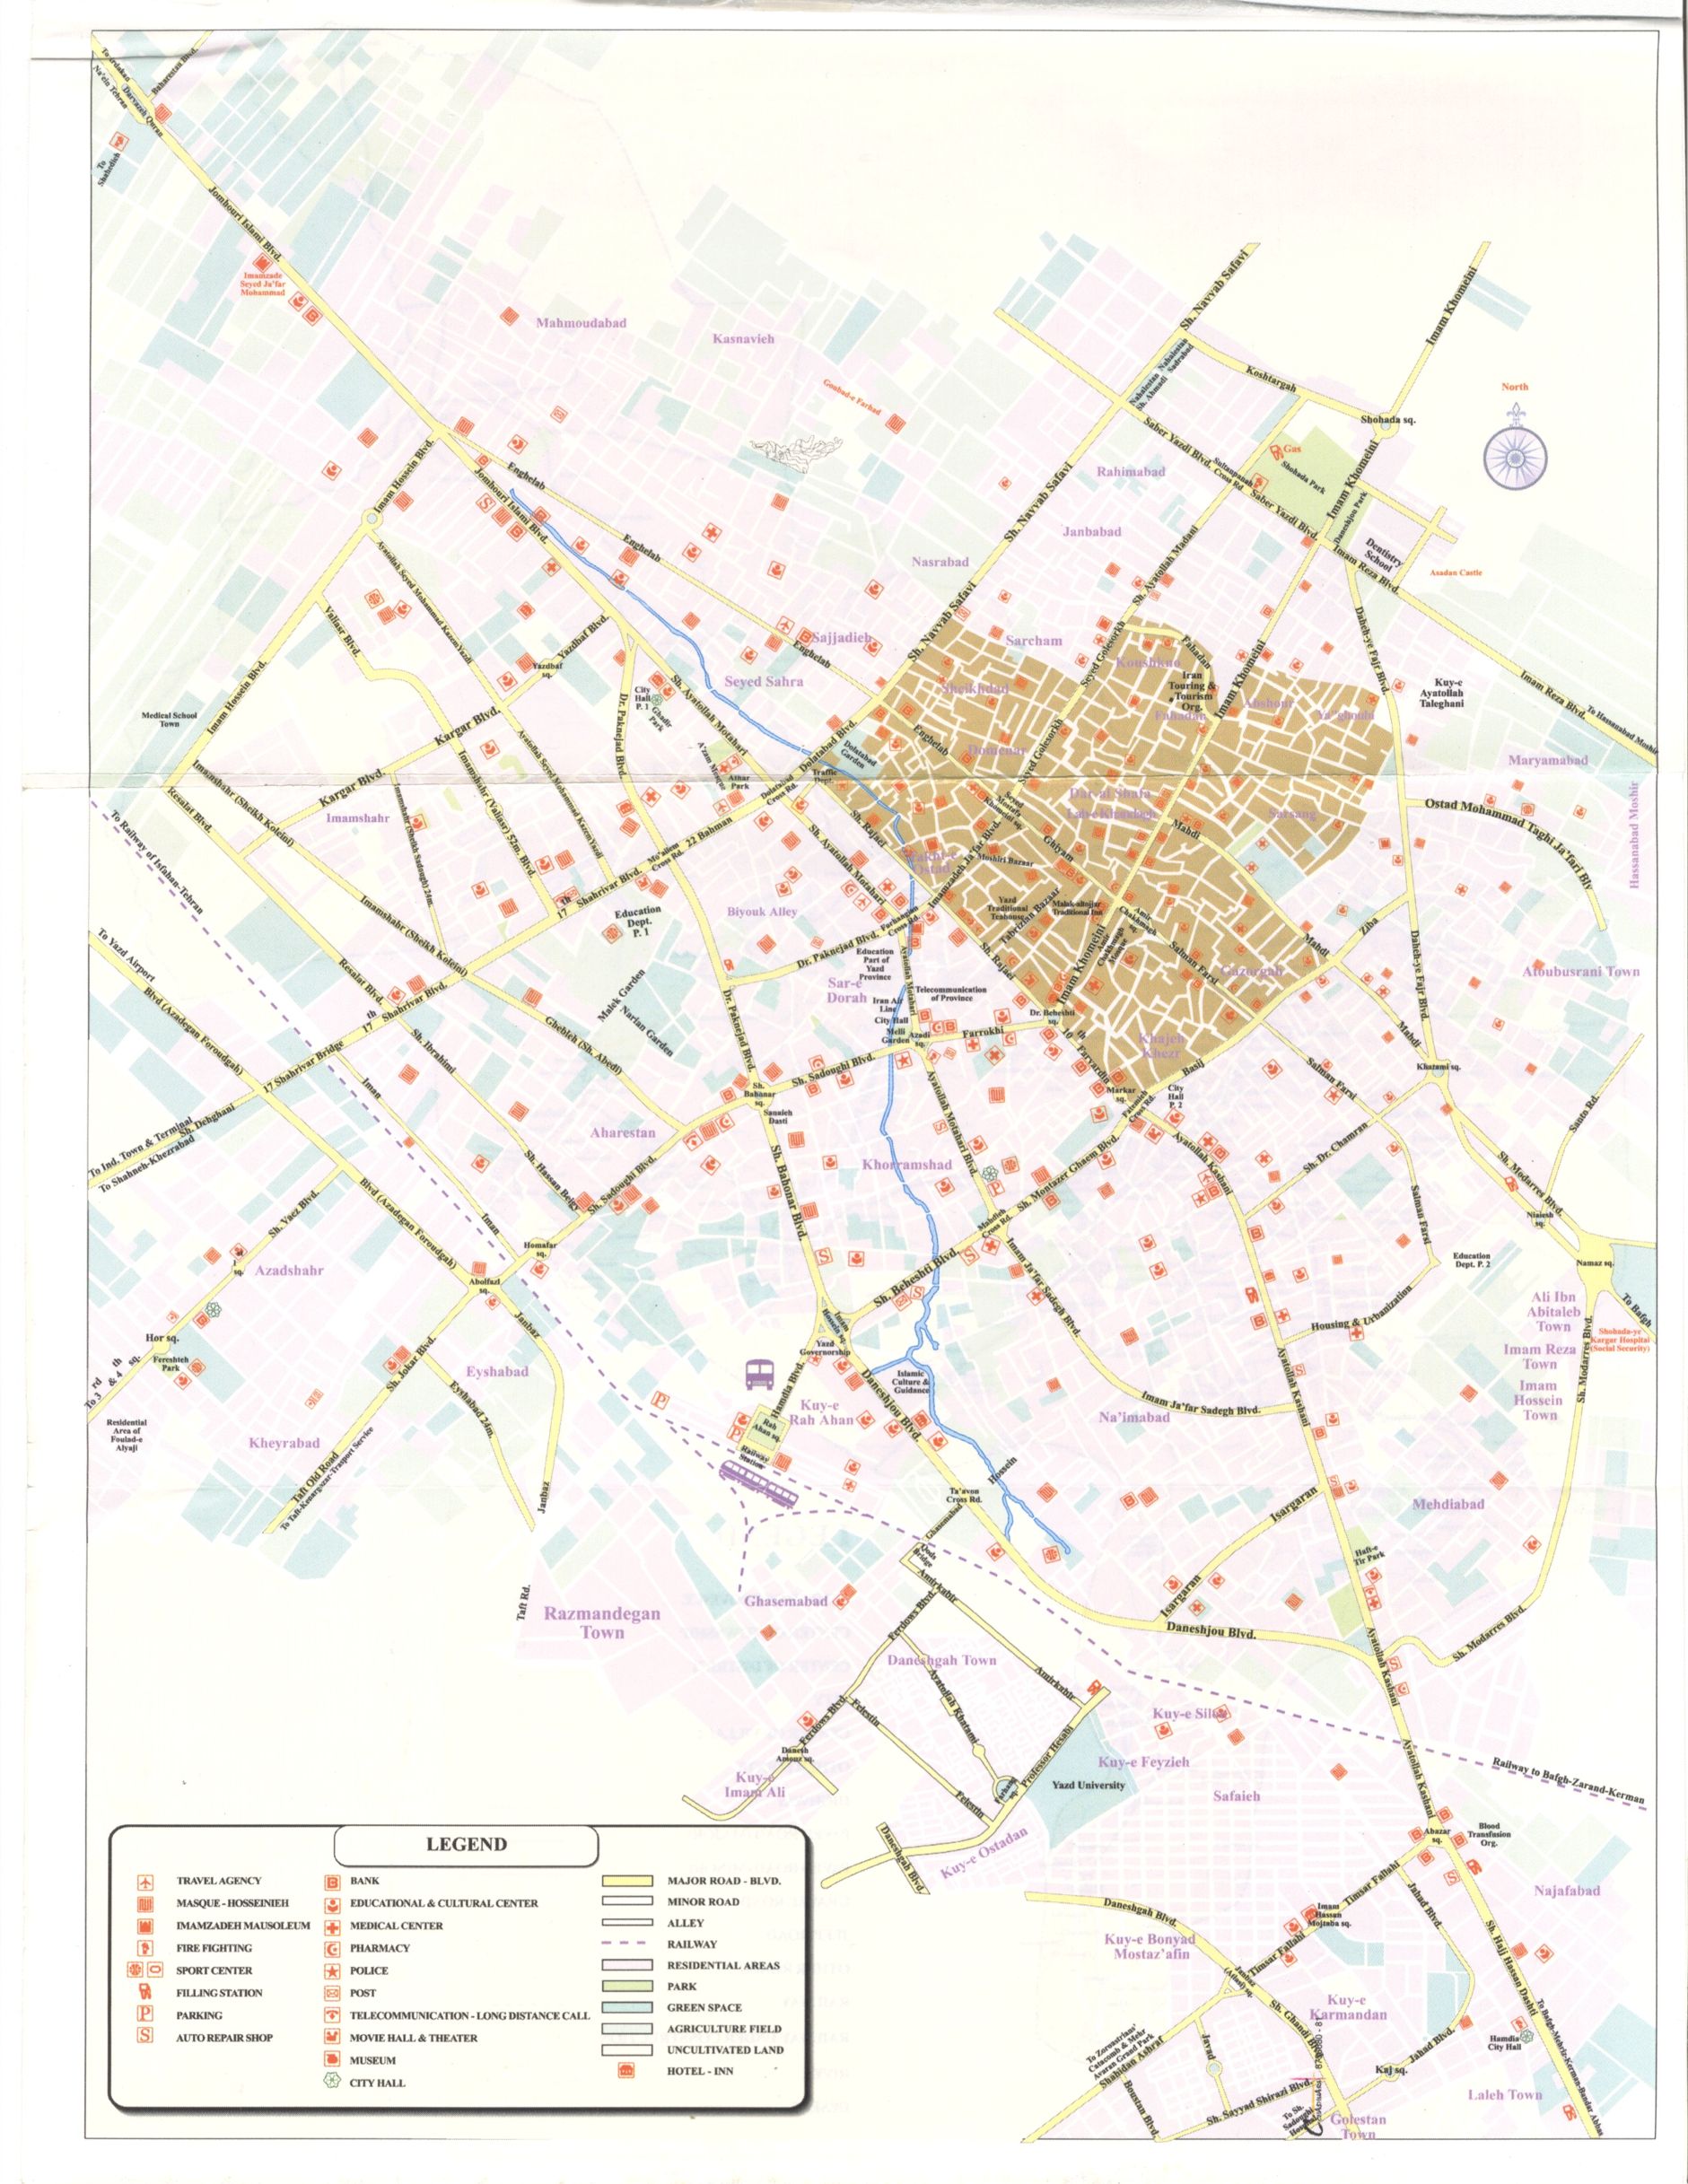 Yazd City Map (2005) High Resolution Image 542KB